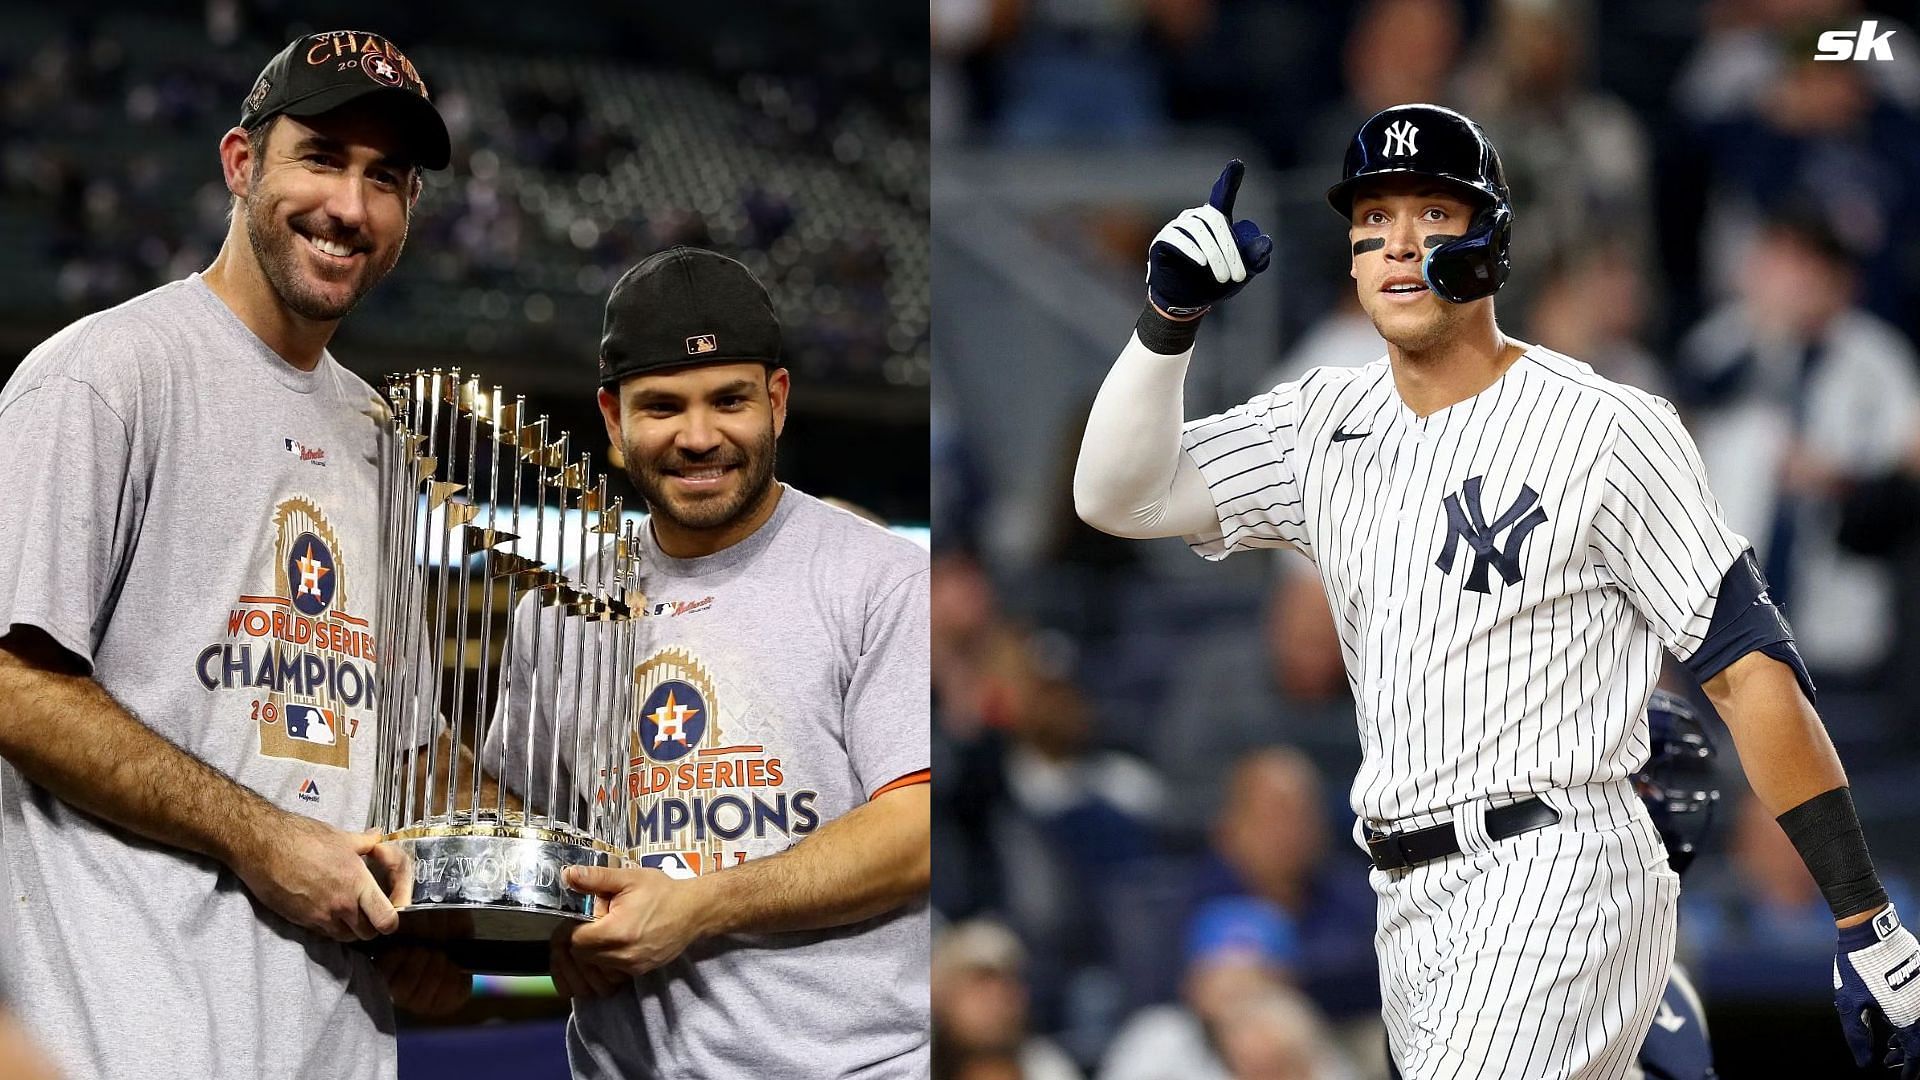 NY Yankees World Series Champs - Derek Jeter Holding Trophy